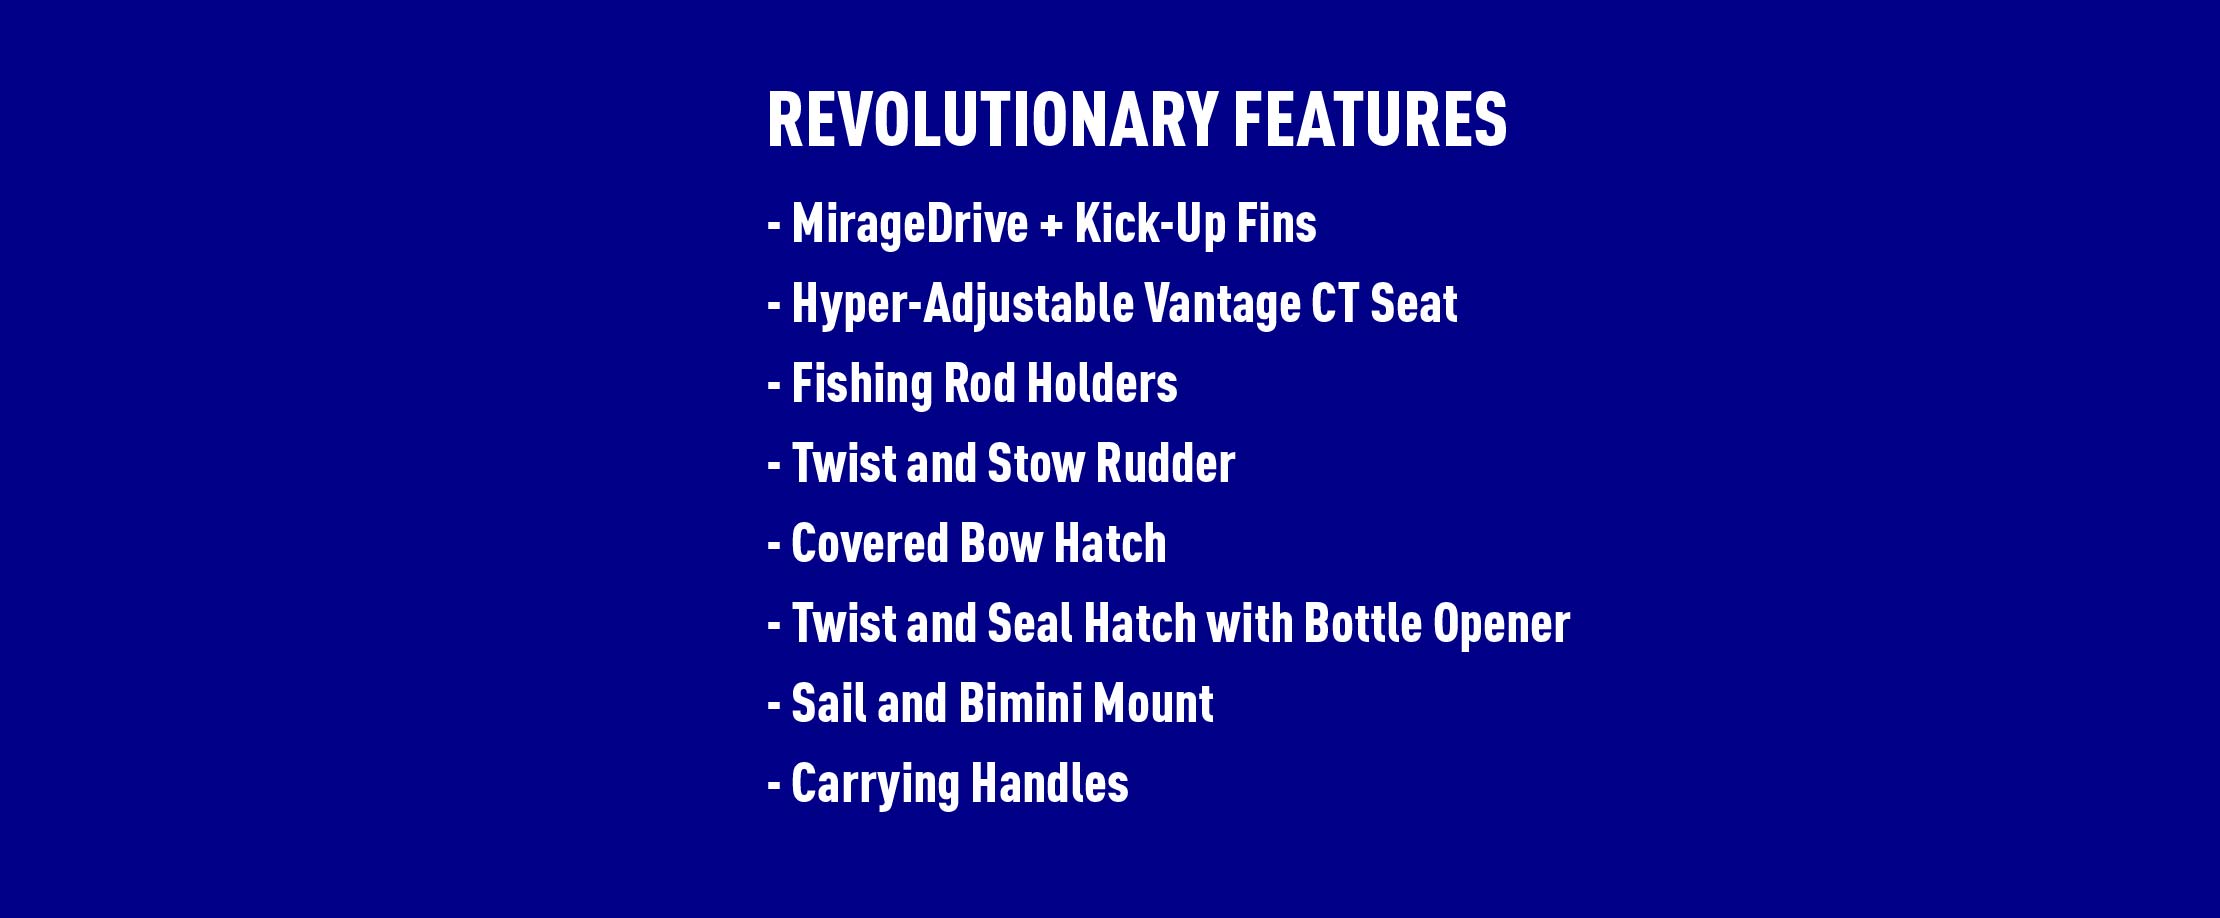 Mirage Revolution 11 Features